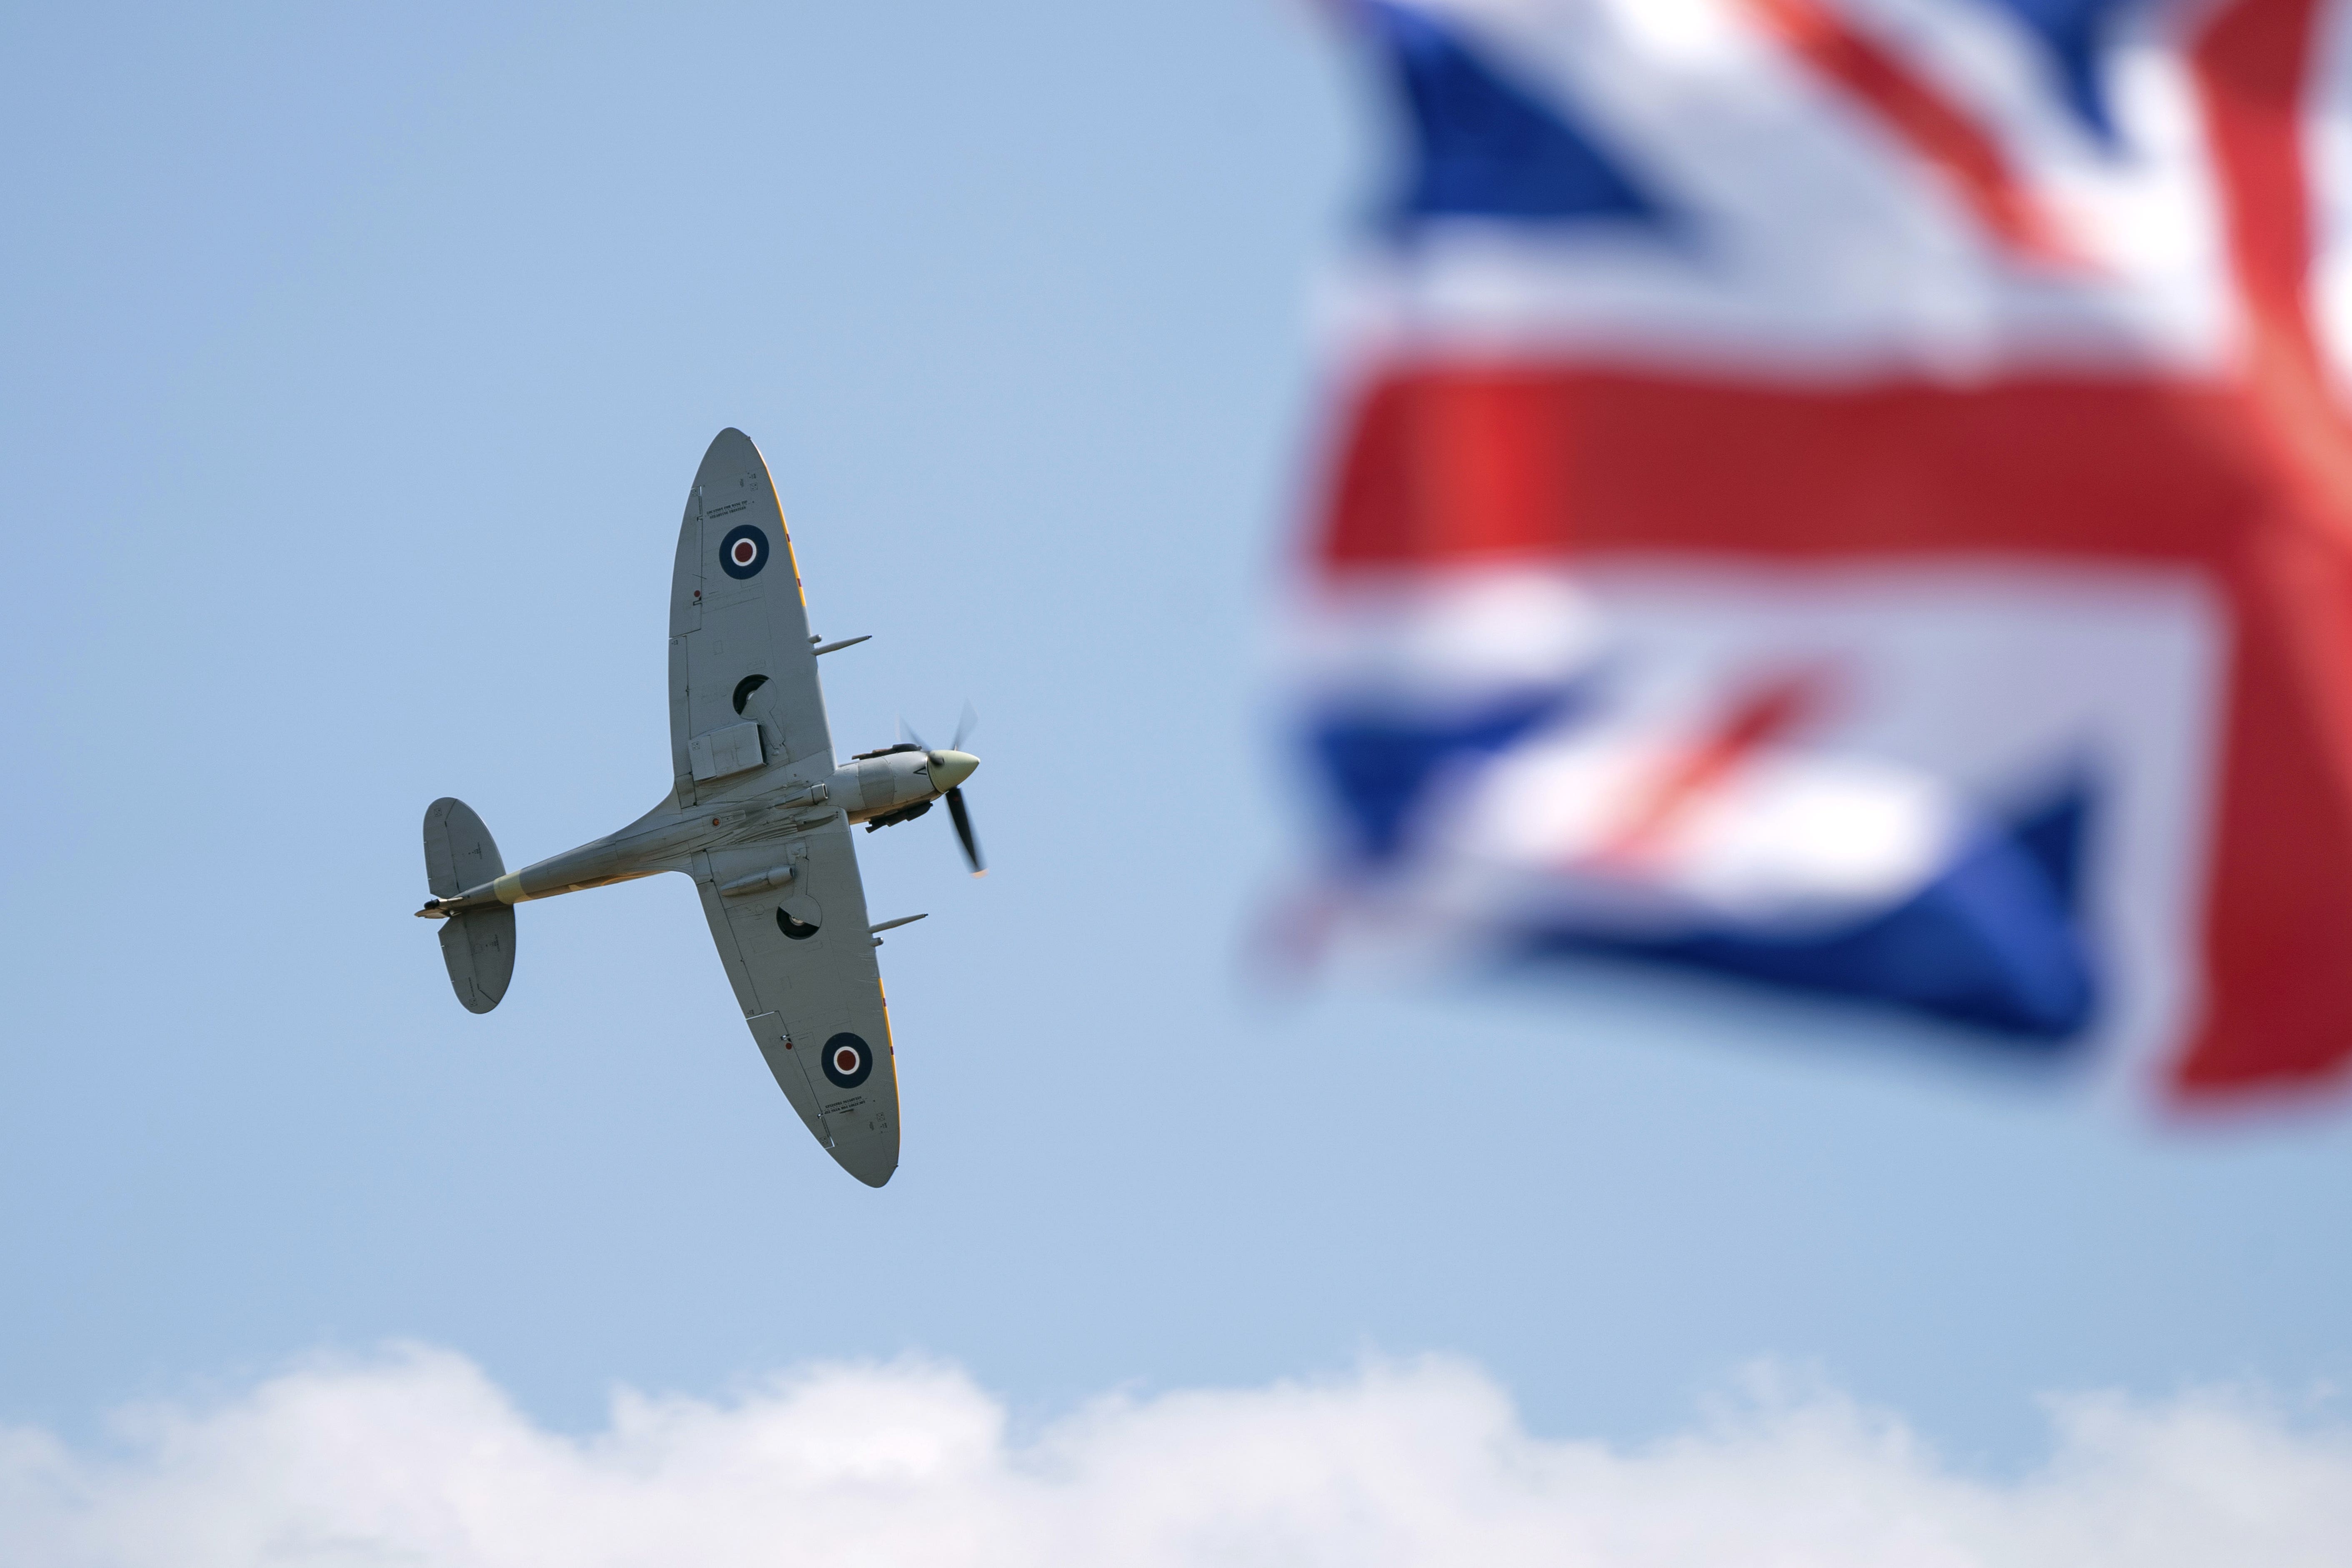 Supermarine Spitfires are often flown in World War Two memorial events